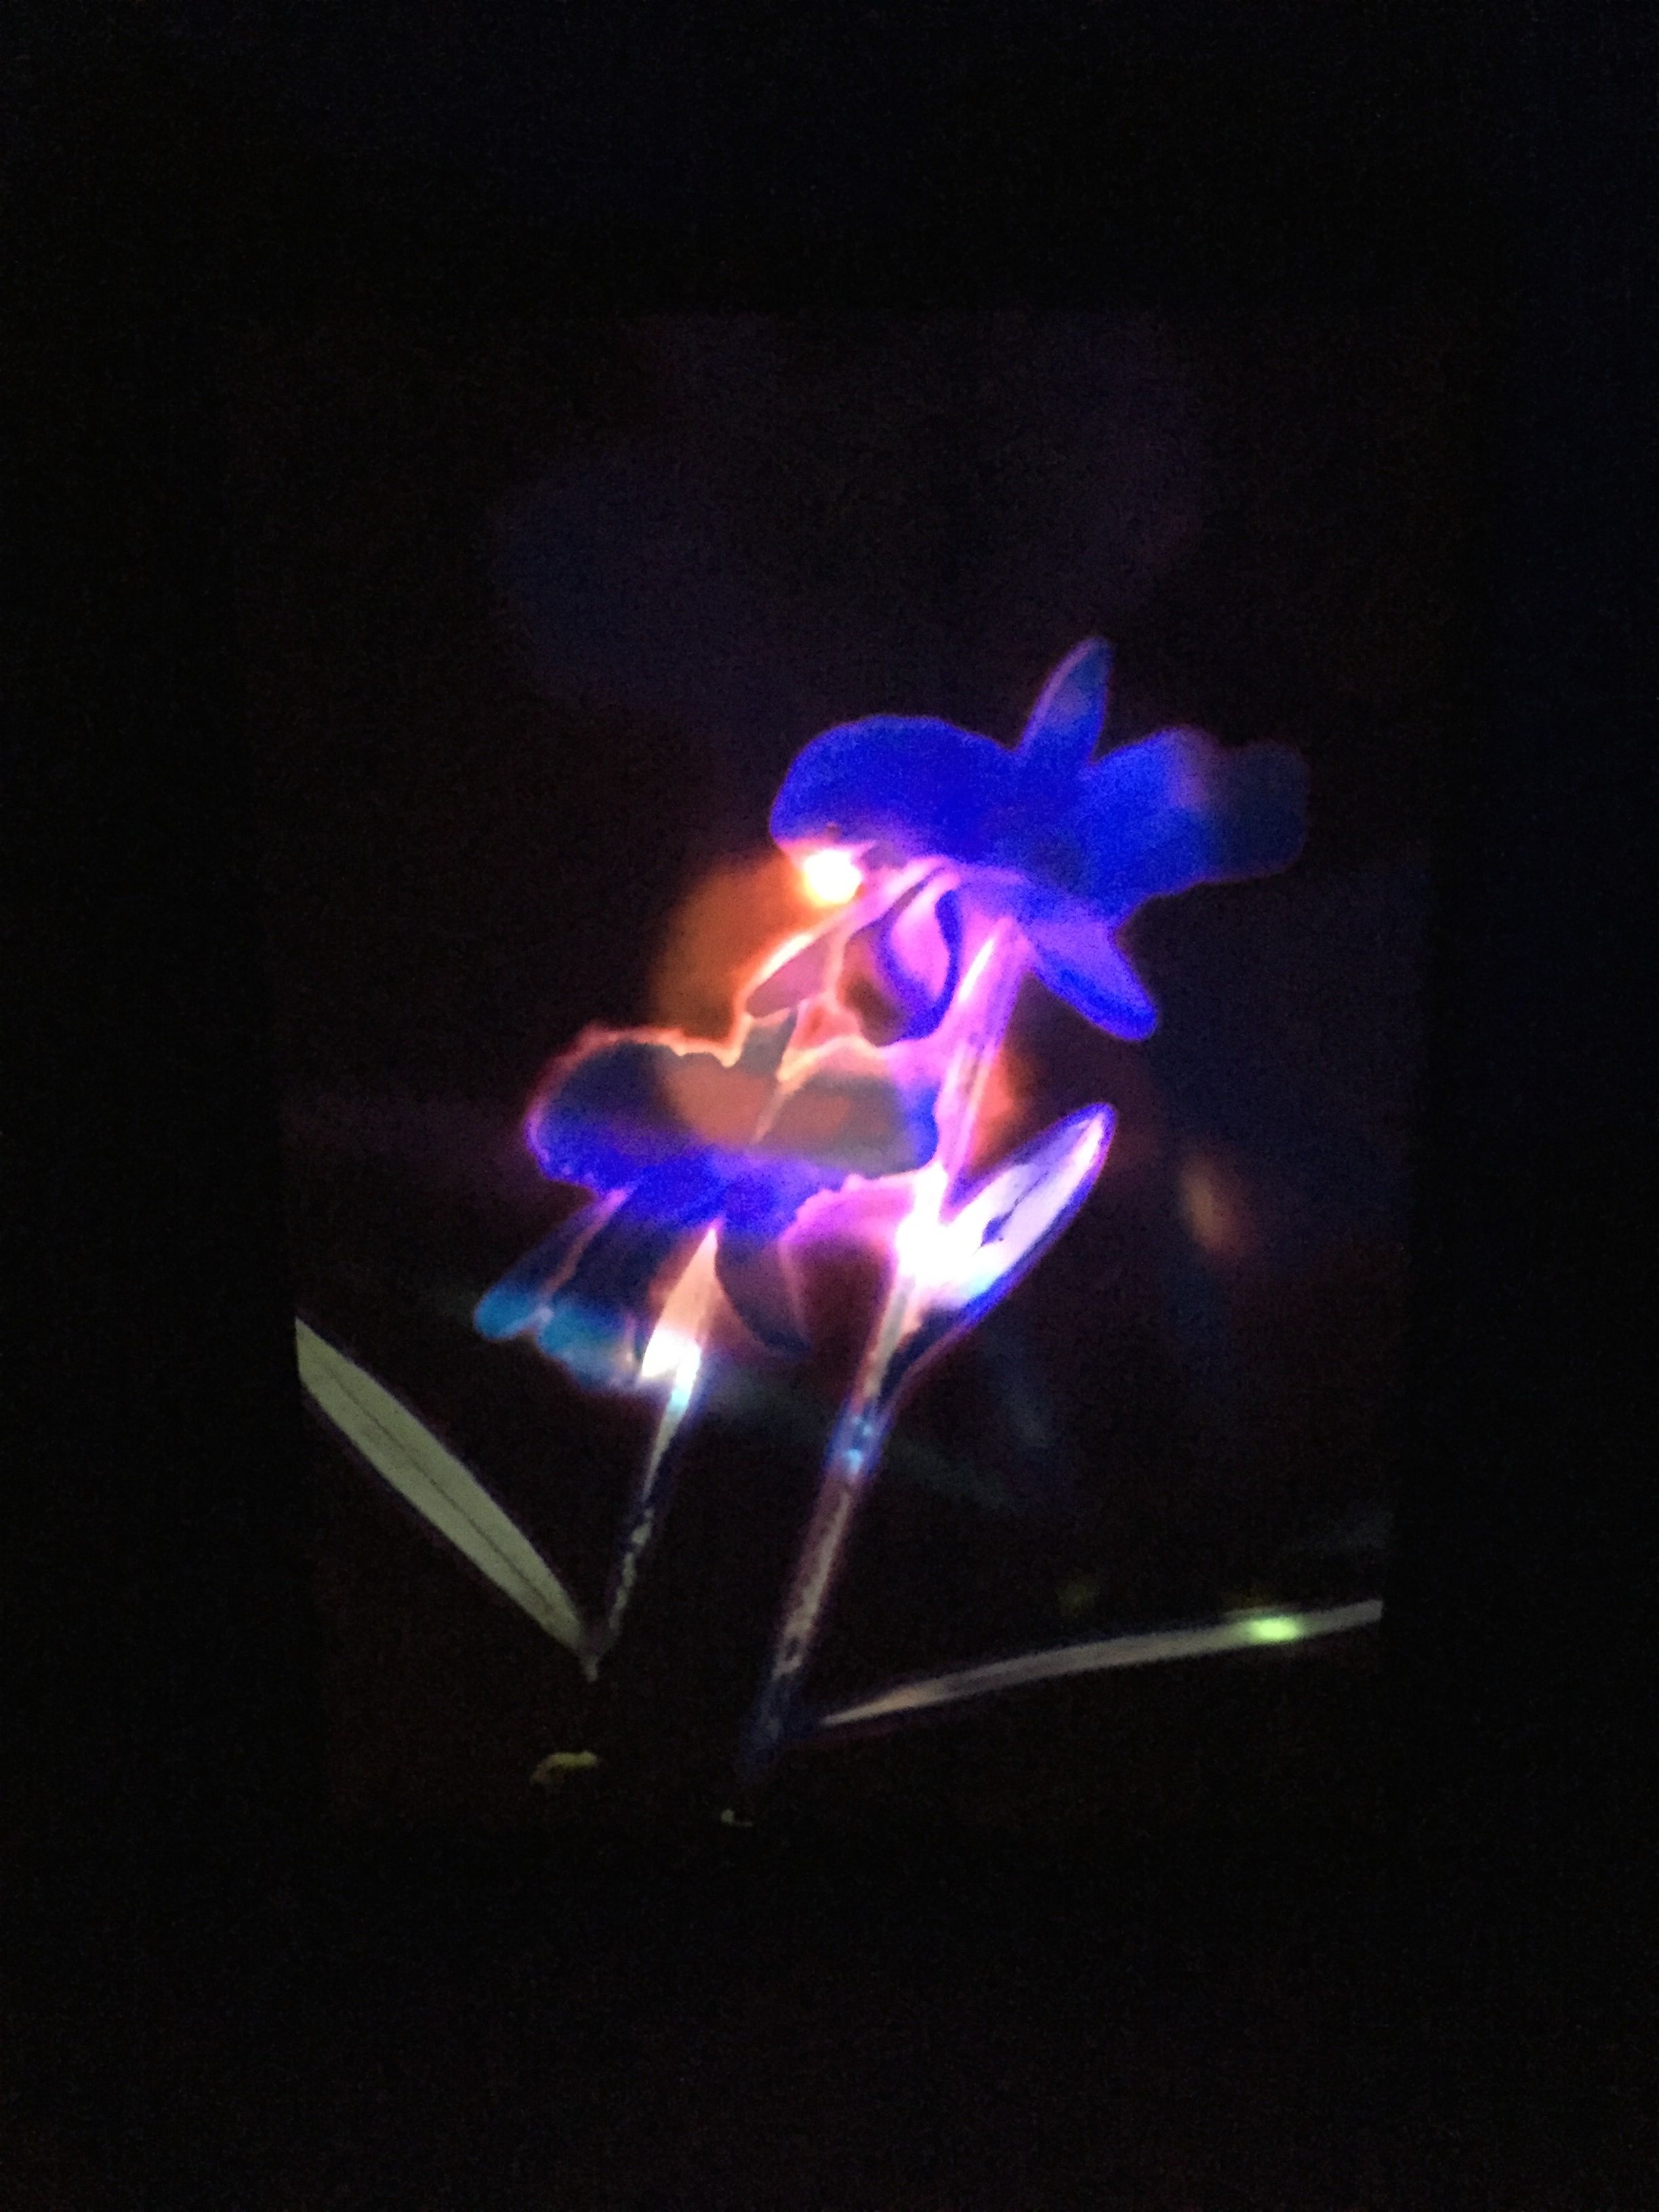   Mikawa Iris Series,  two Duratrans superimposed photo on light box, 30” x 24” x 6” deep.&nbsp; 